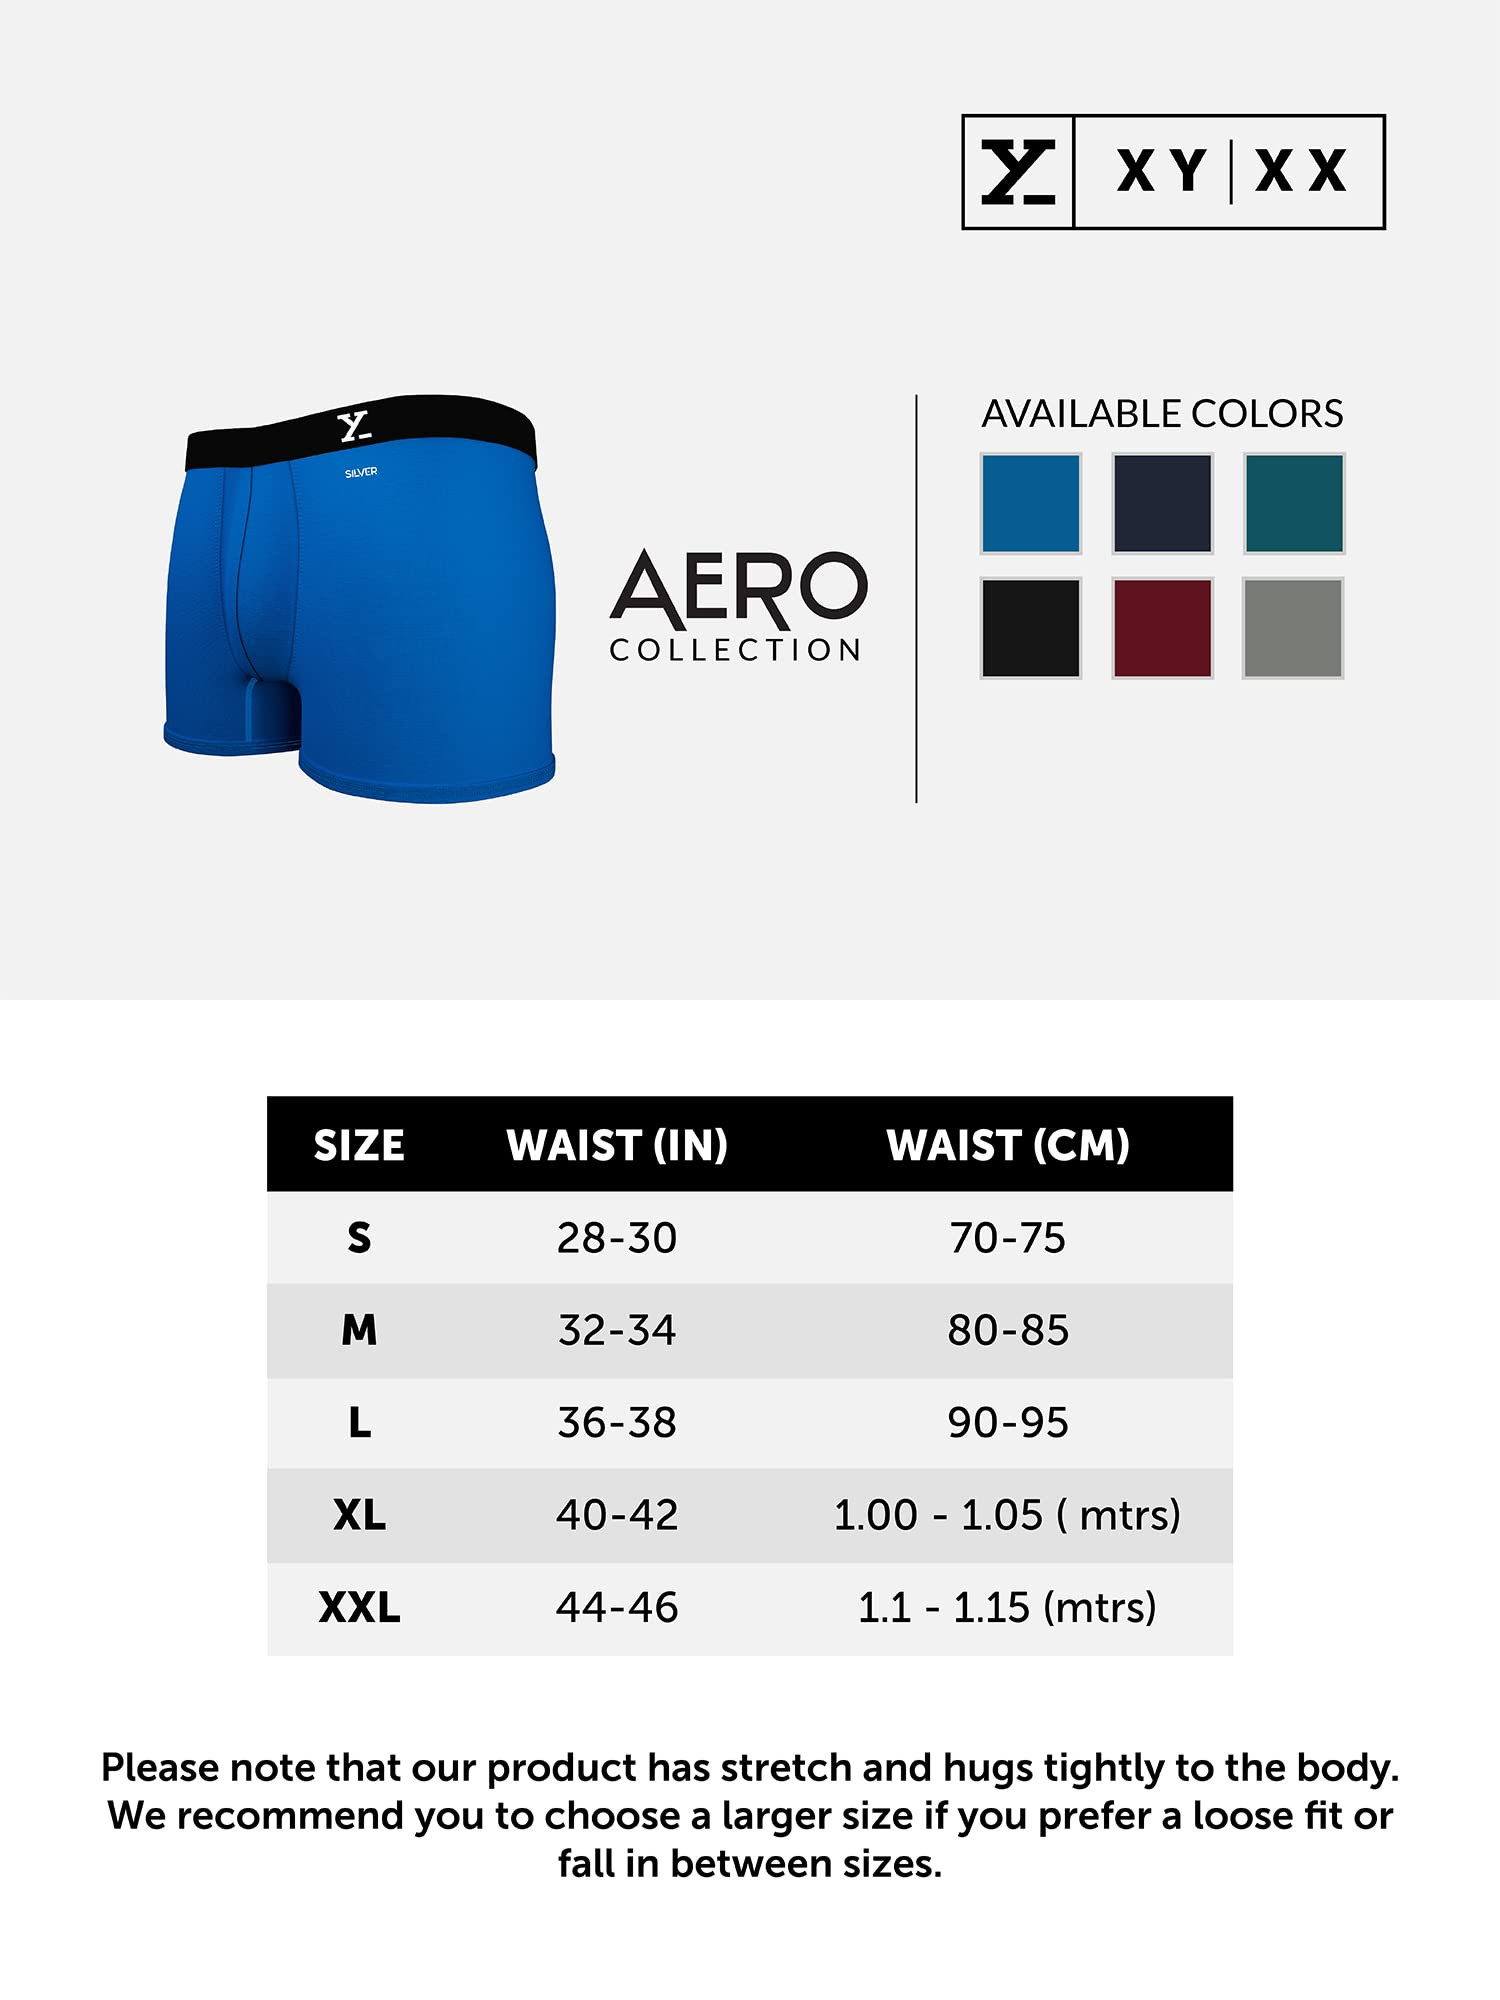 XYXX Men's Aero Silver Cotton Underwear for Men, Anti-Odour Silver